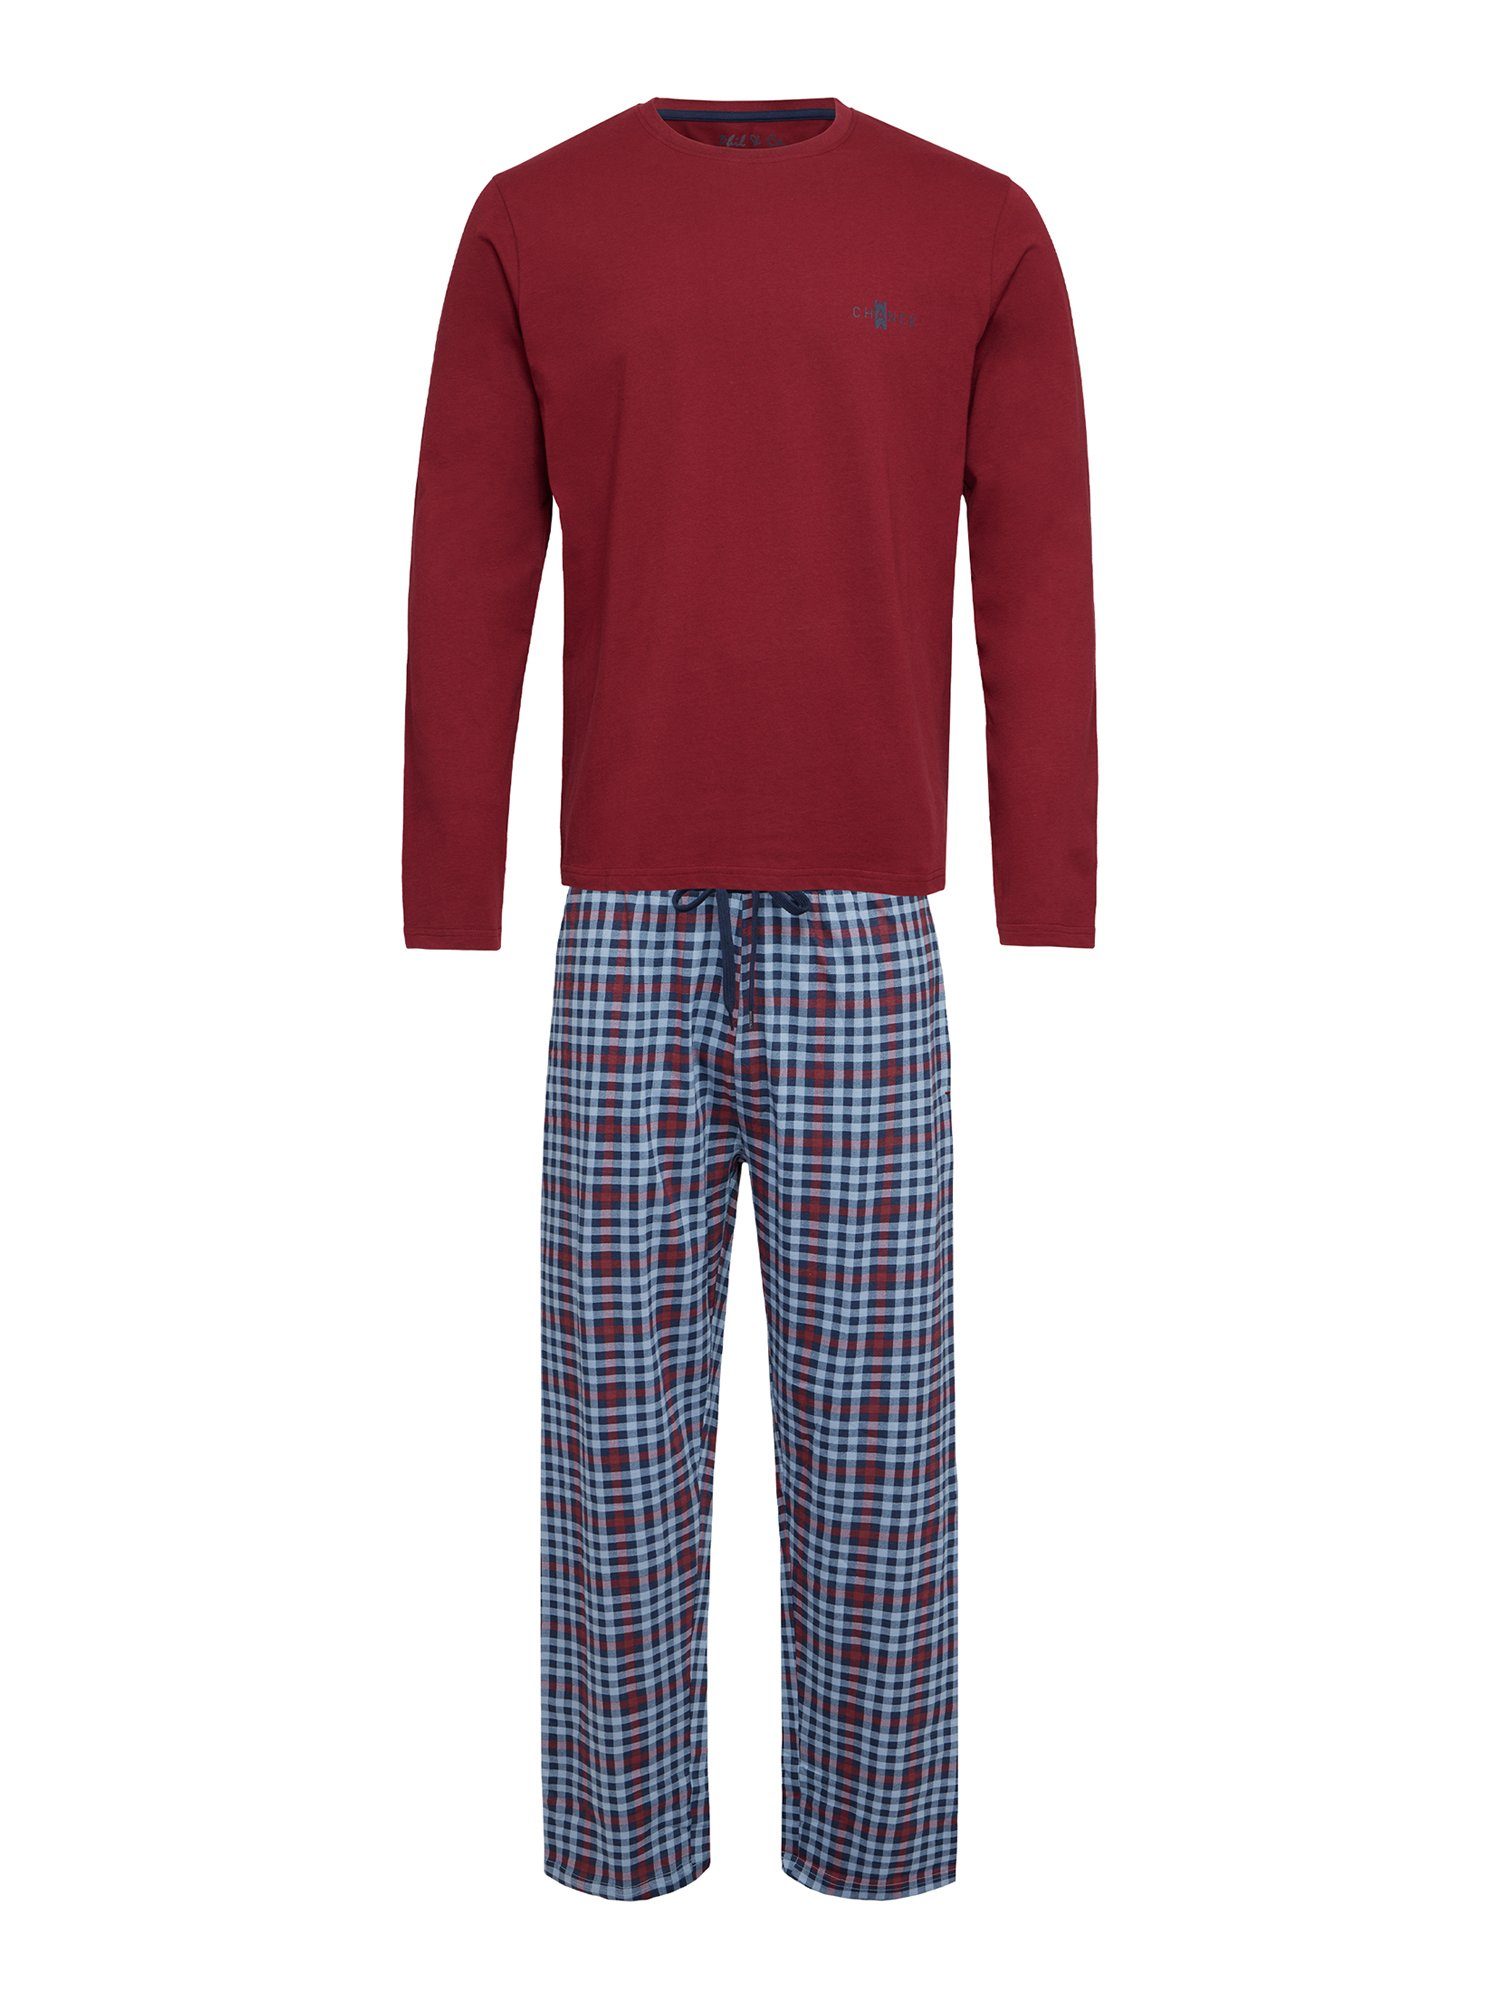 Phil & Co. Pyjama Special (2 tlg) schlafanzug schlafmode bequem weinrot-karo